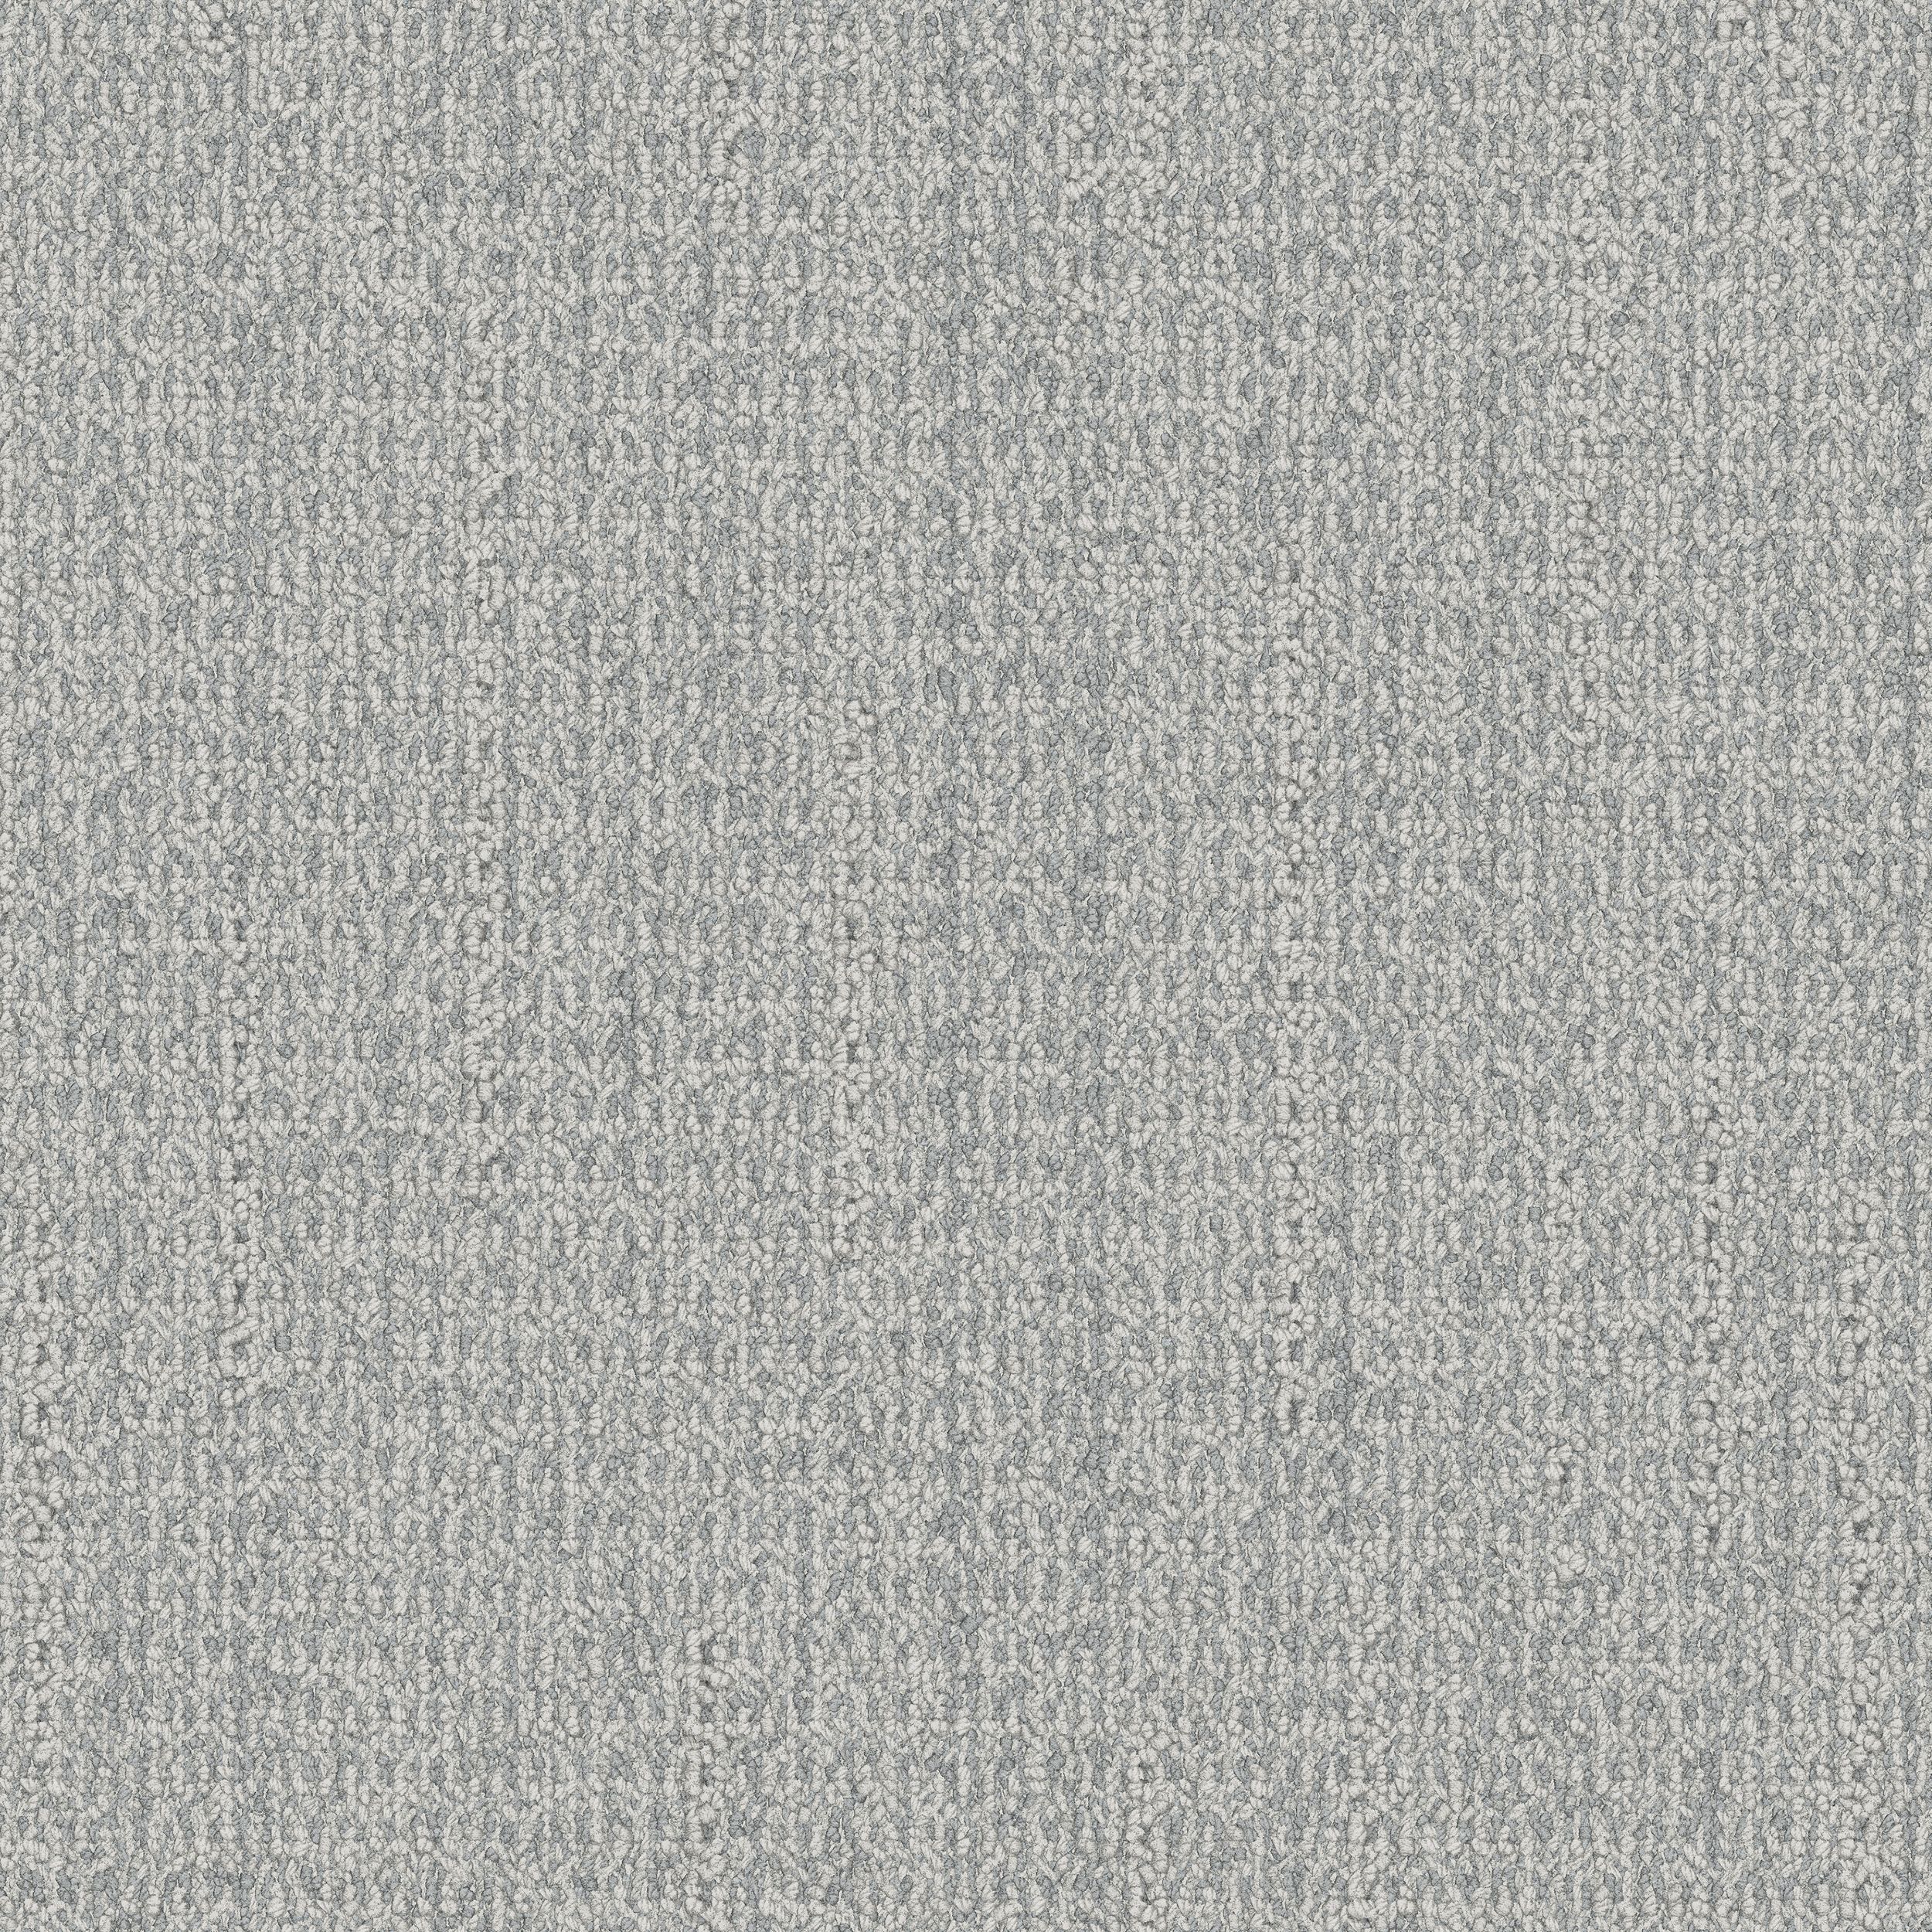 WG100 Carpet Tile In Pearl número de imagen 1